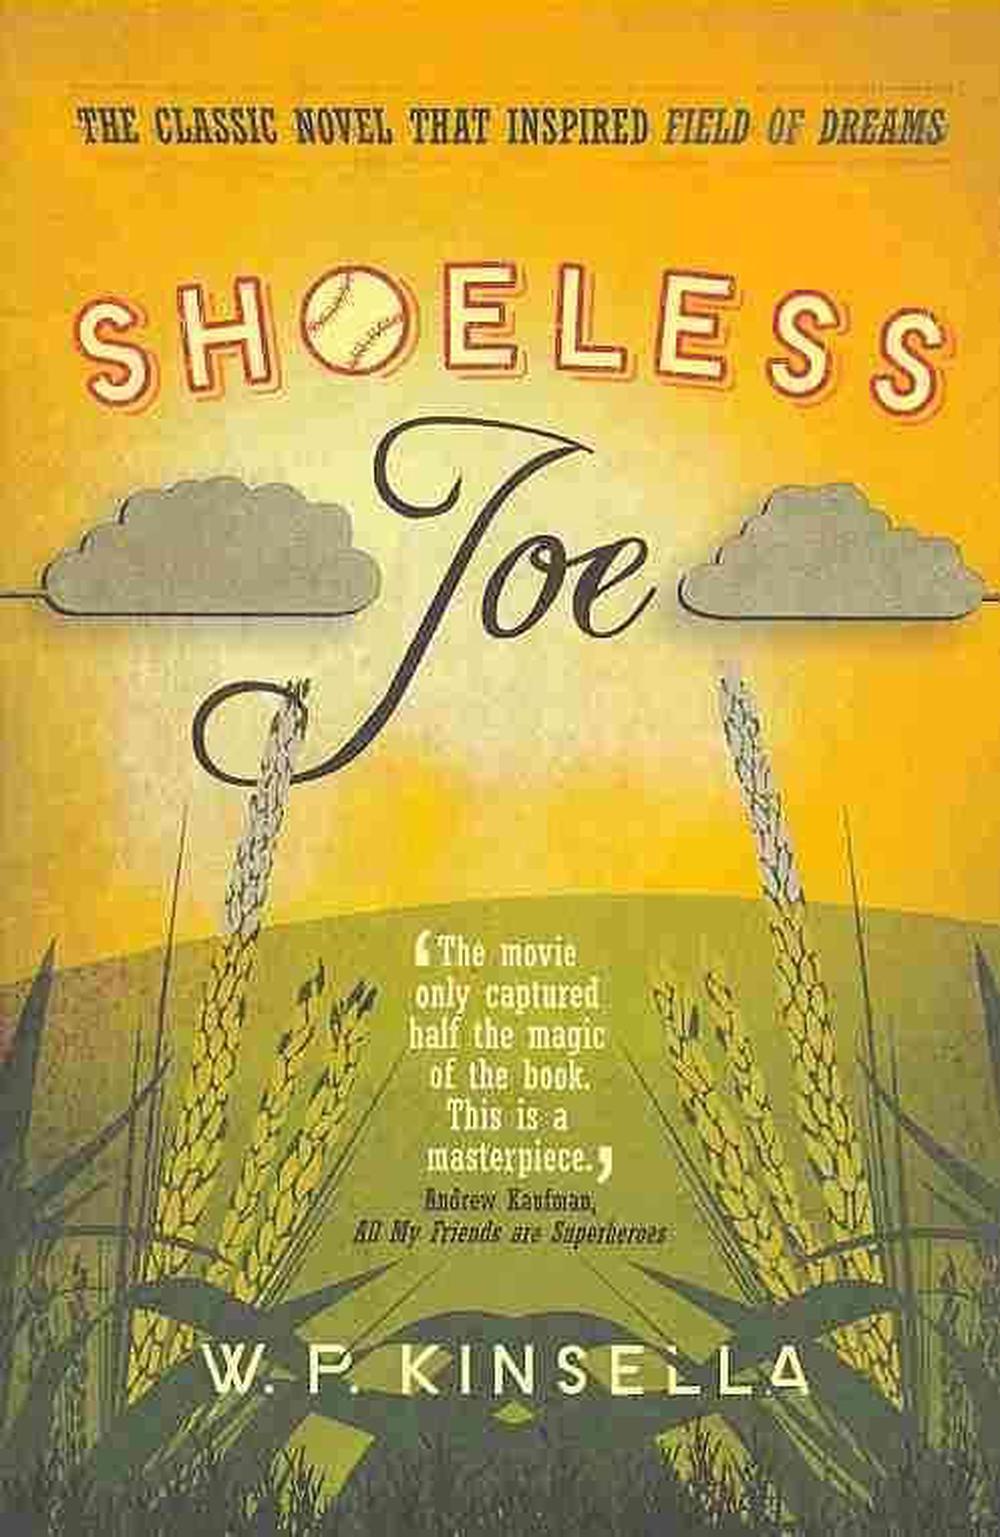 Shoeless Joe by W.P. Kinsella